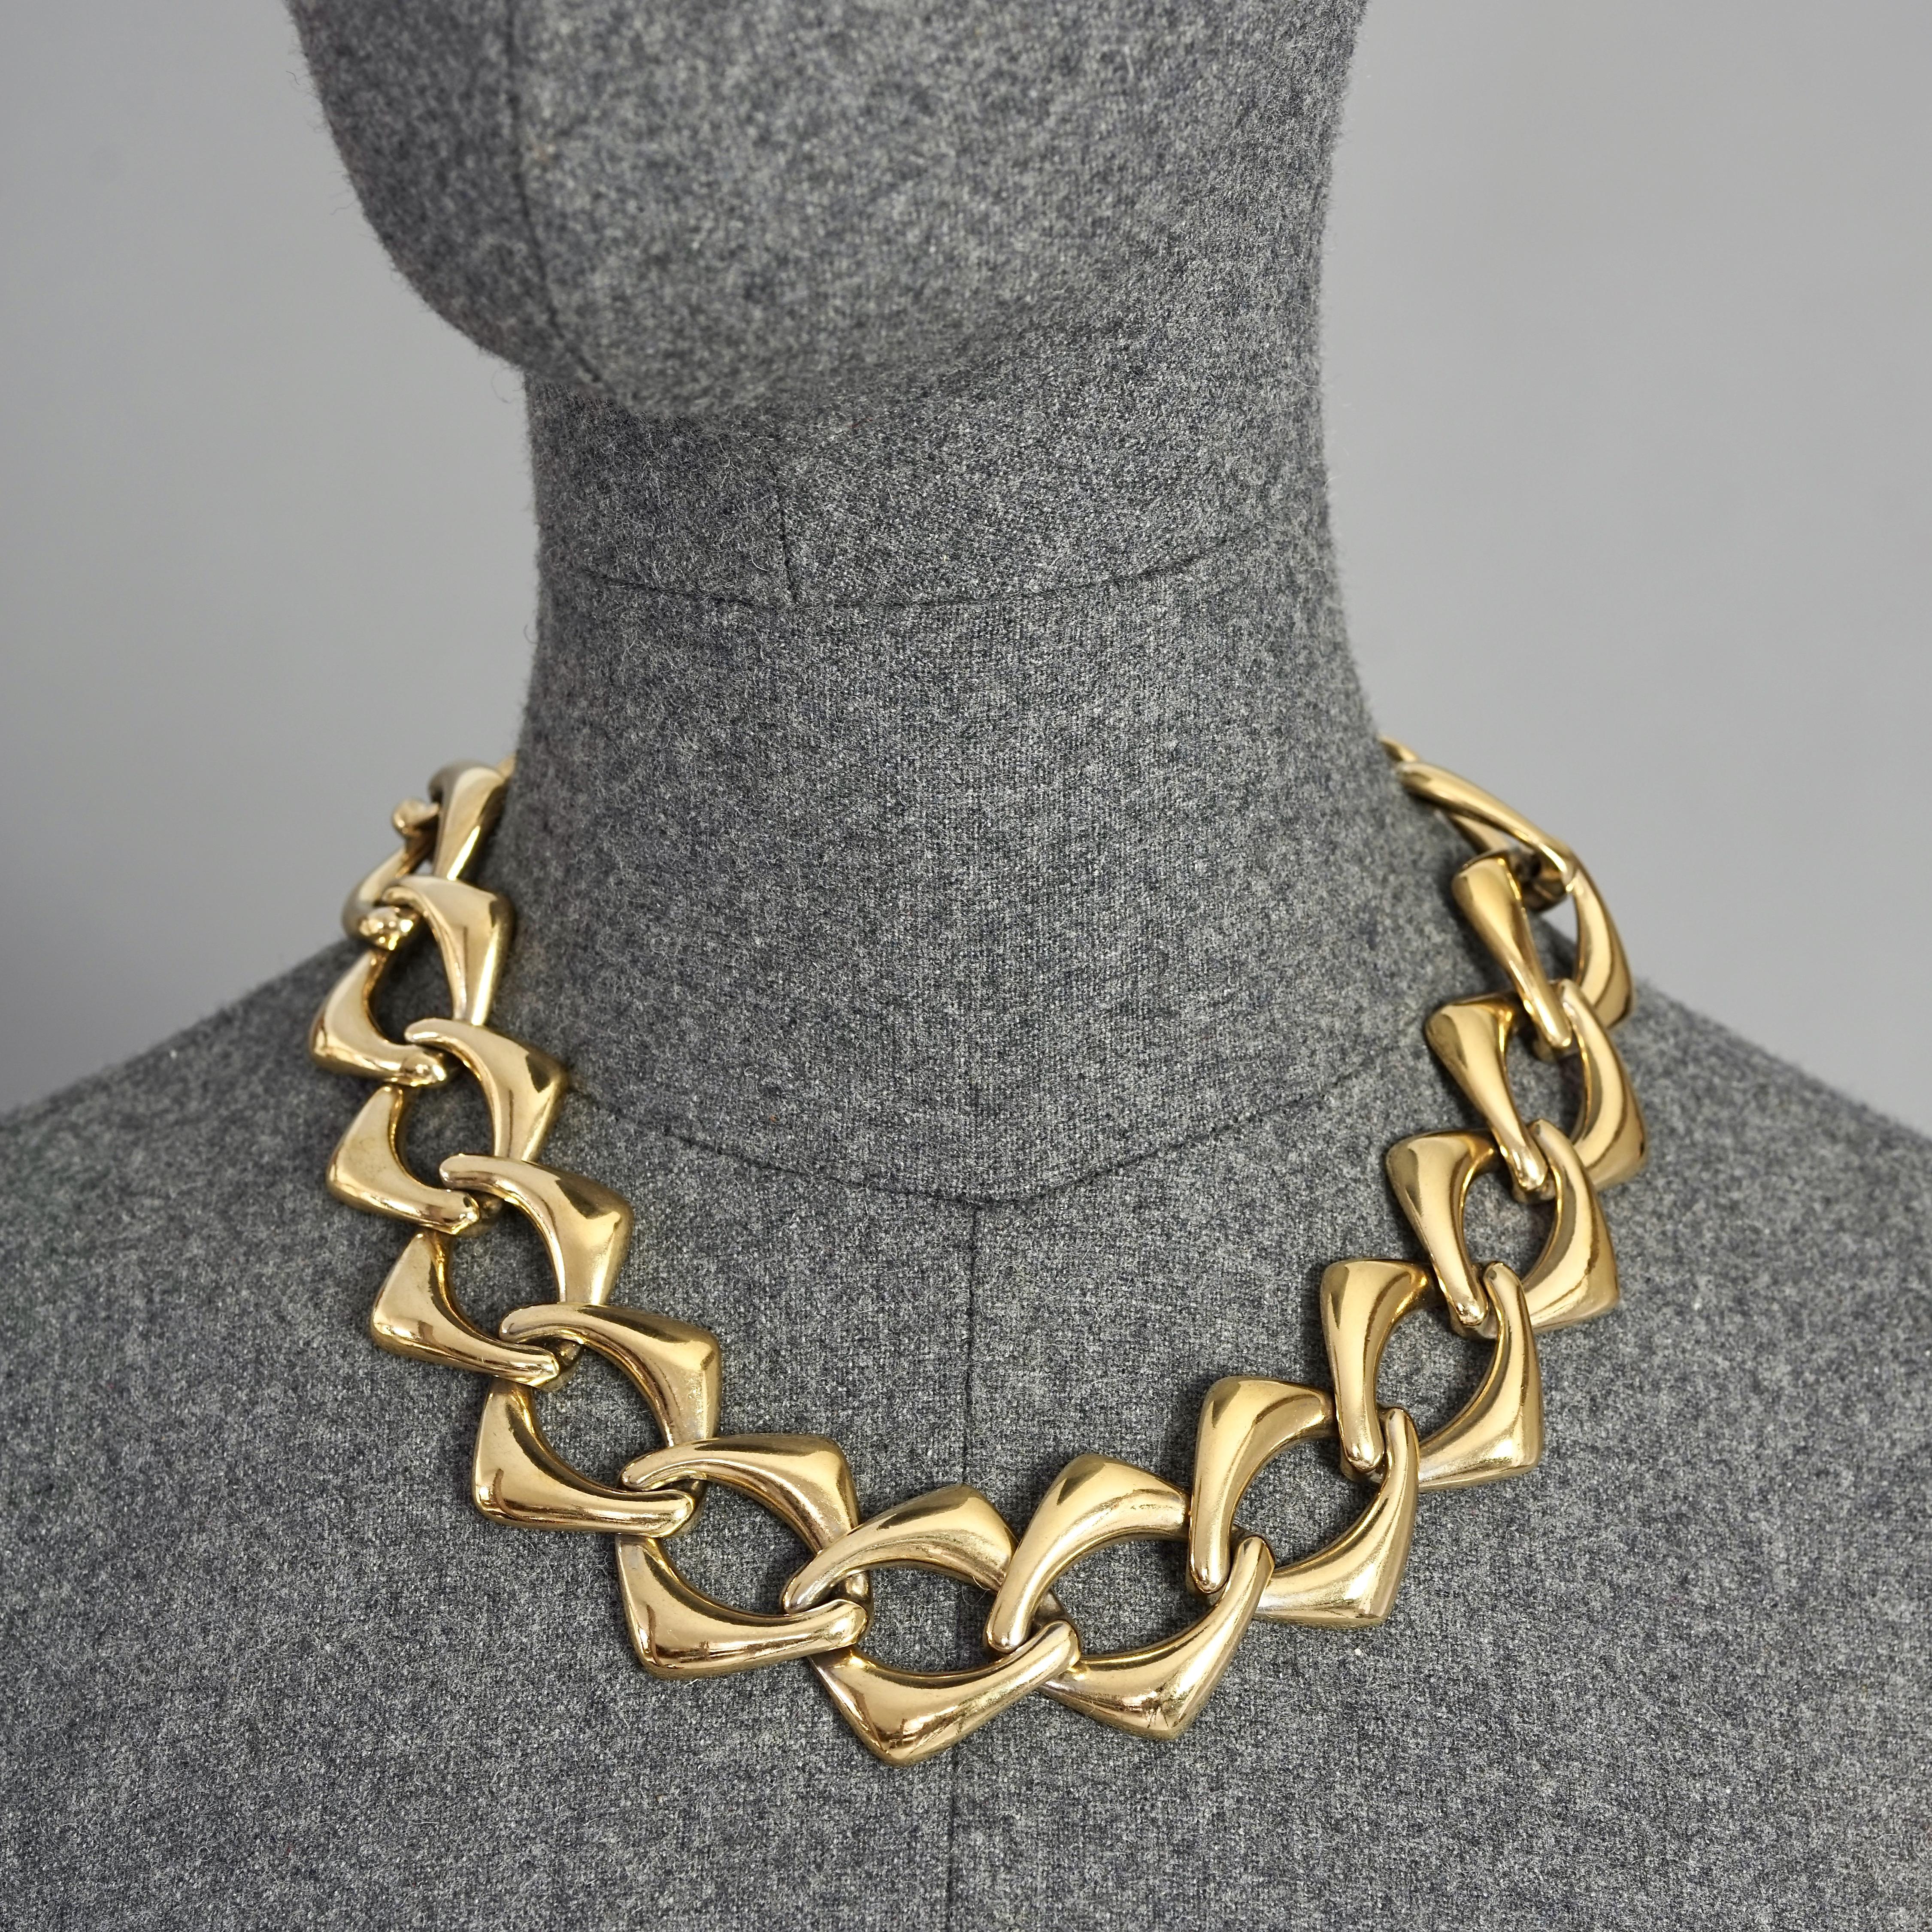 Vintage YVES SAINT LAURENT Ysl by Robert Goossens Chain Choker Necklace For Sale 1